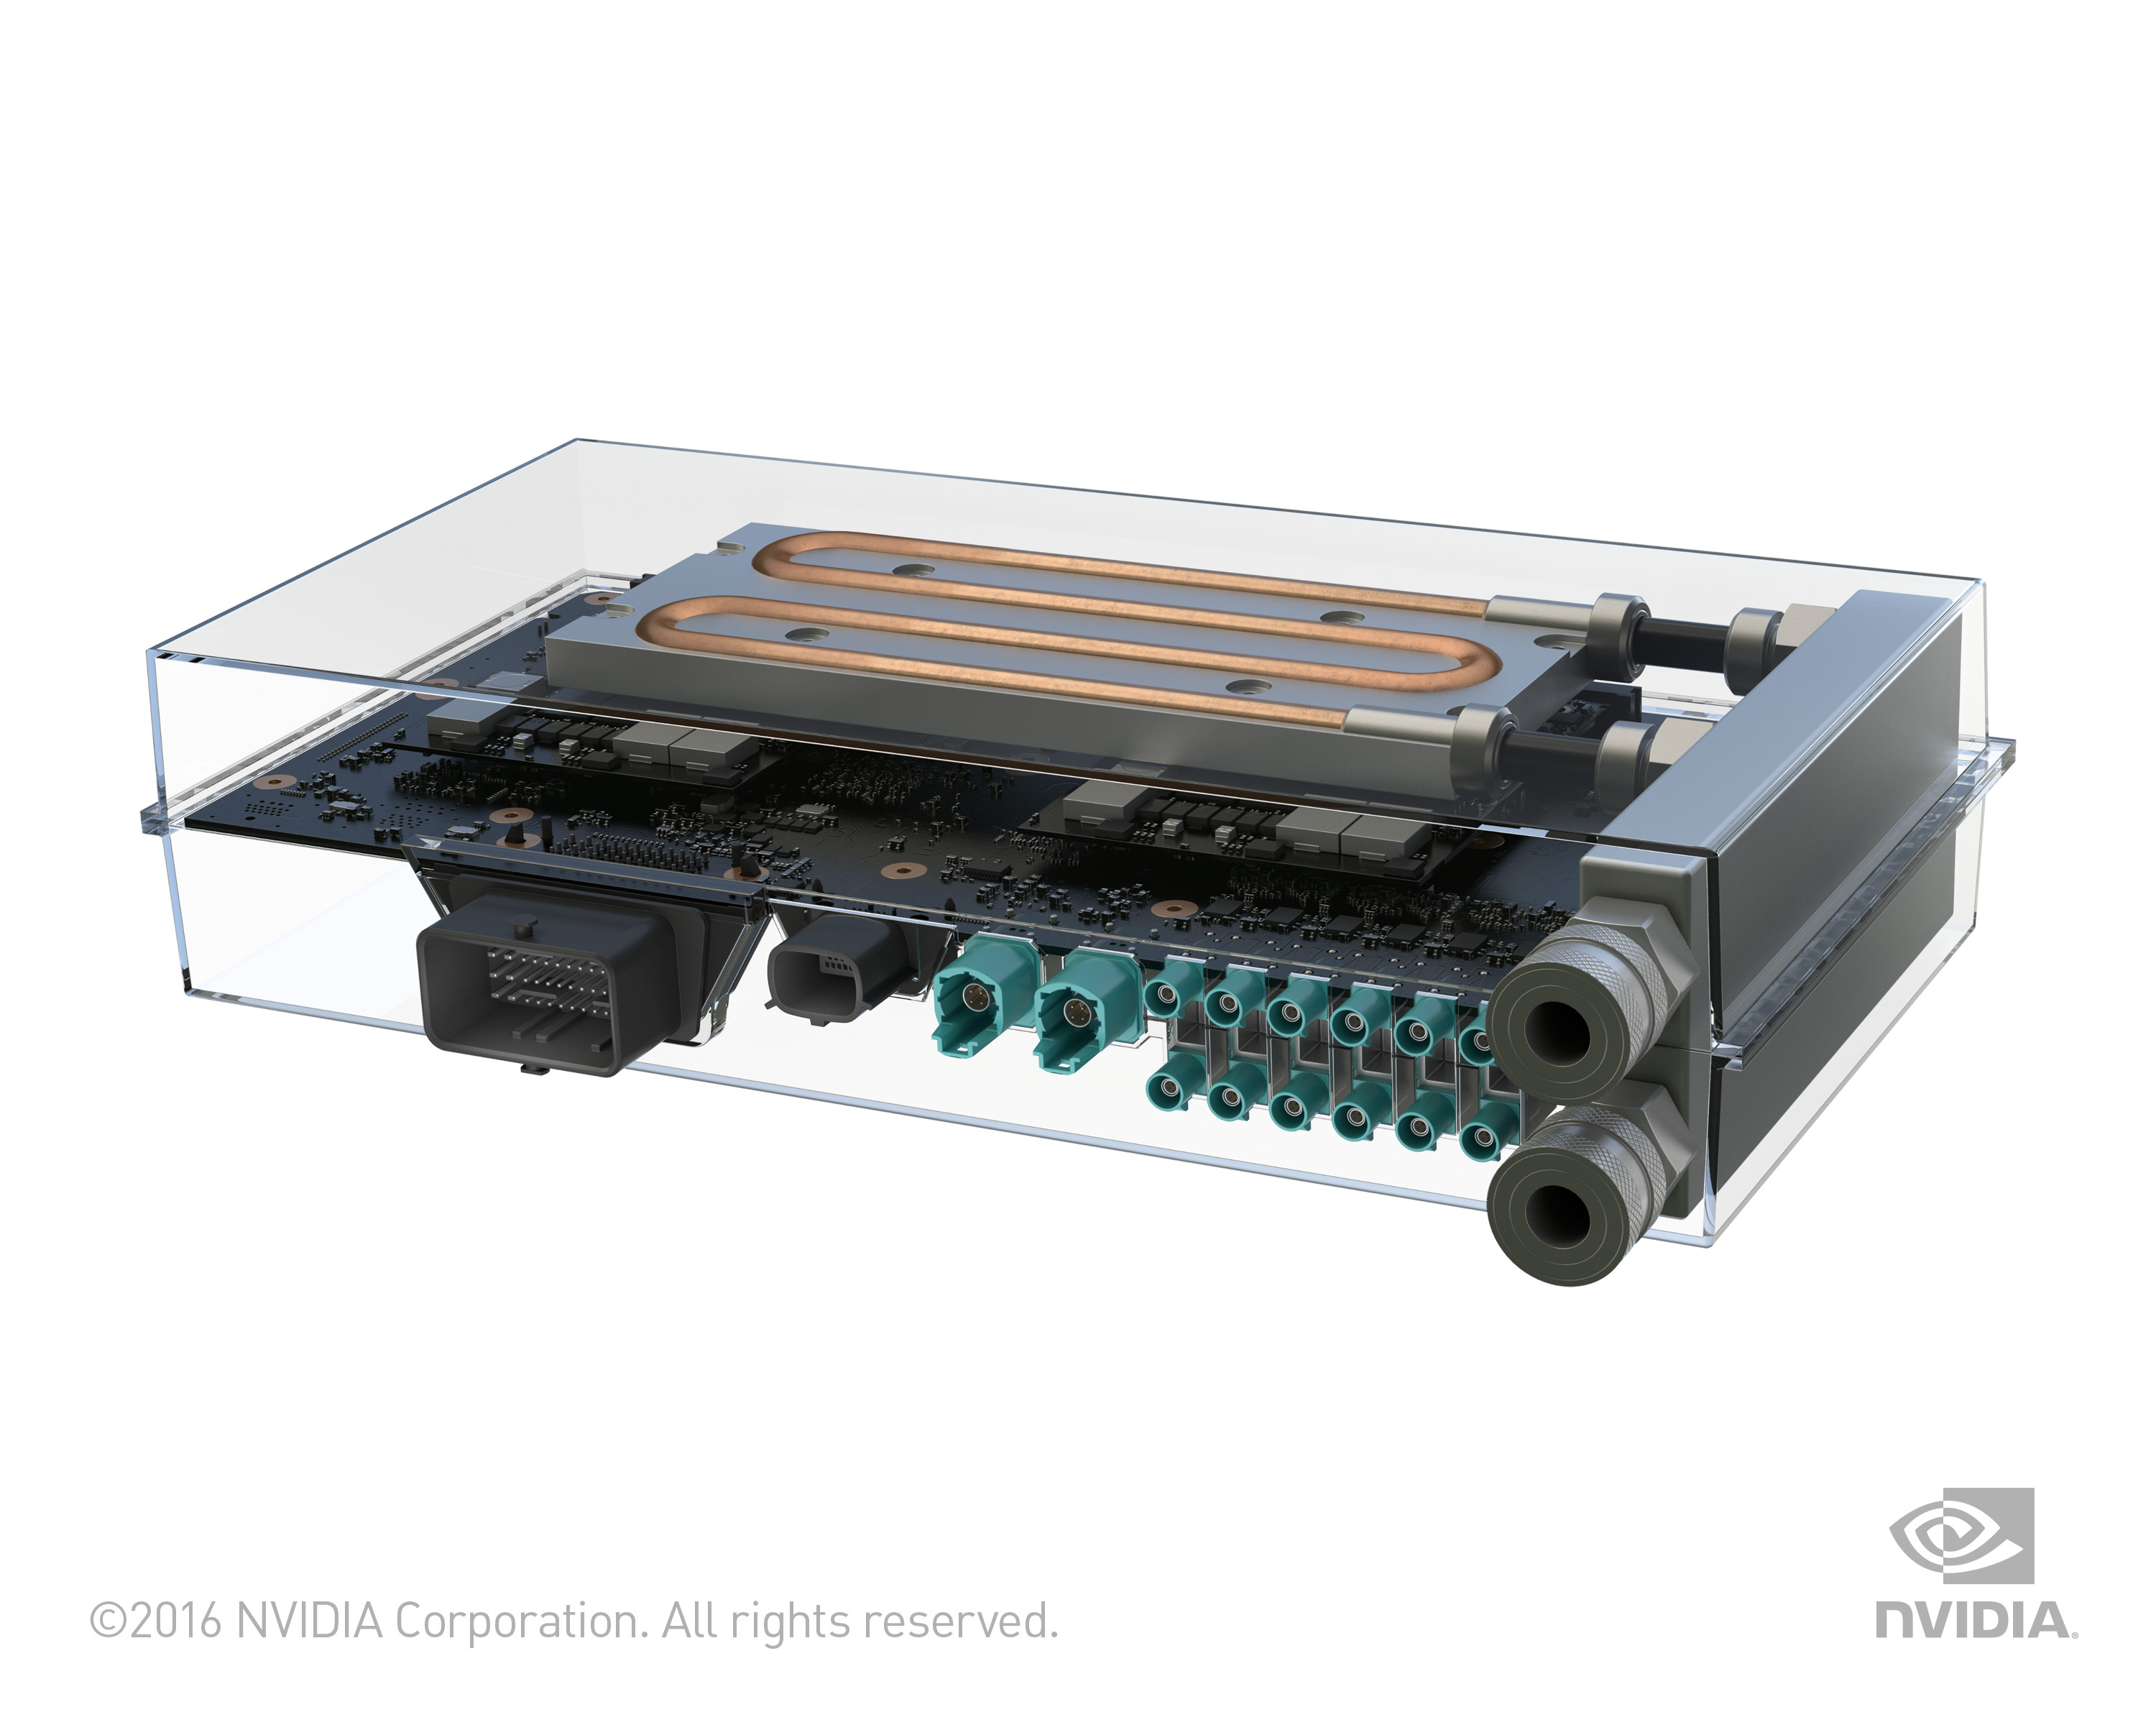 Nvidiaが自動運転車用の高性能プロセッサDrive PX 2を発表、&#39;弁当箱サイズのスーパーコンピュータ&#39;